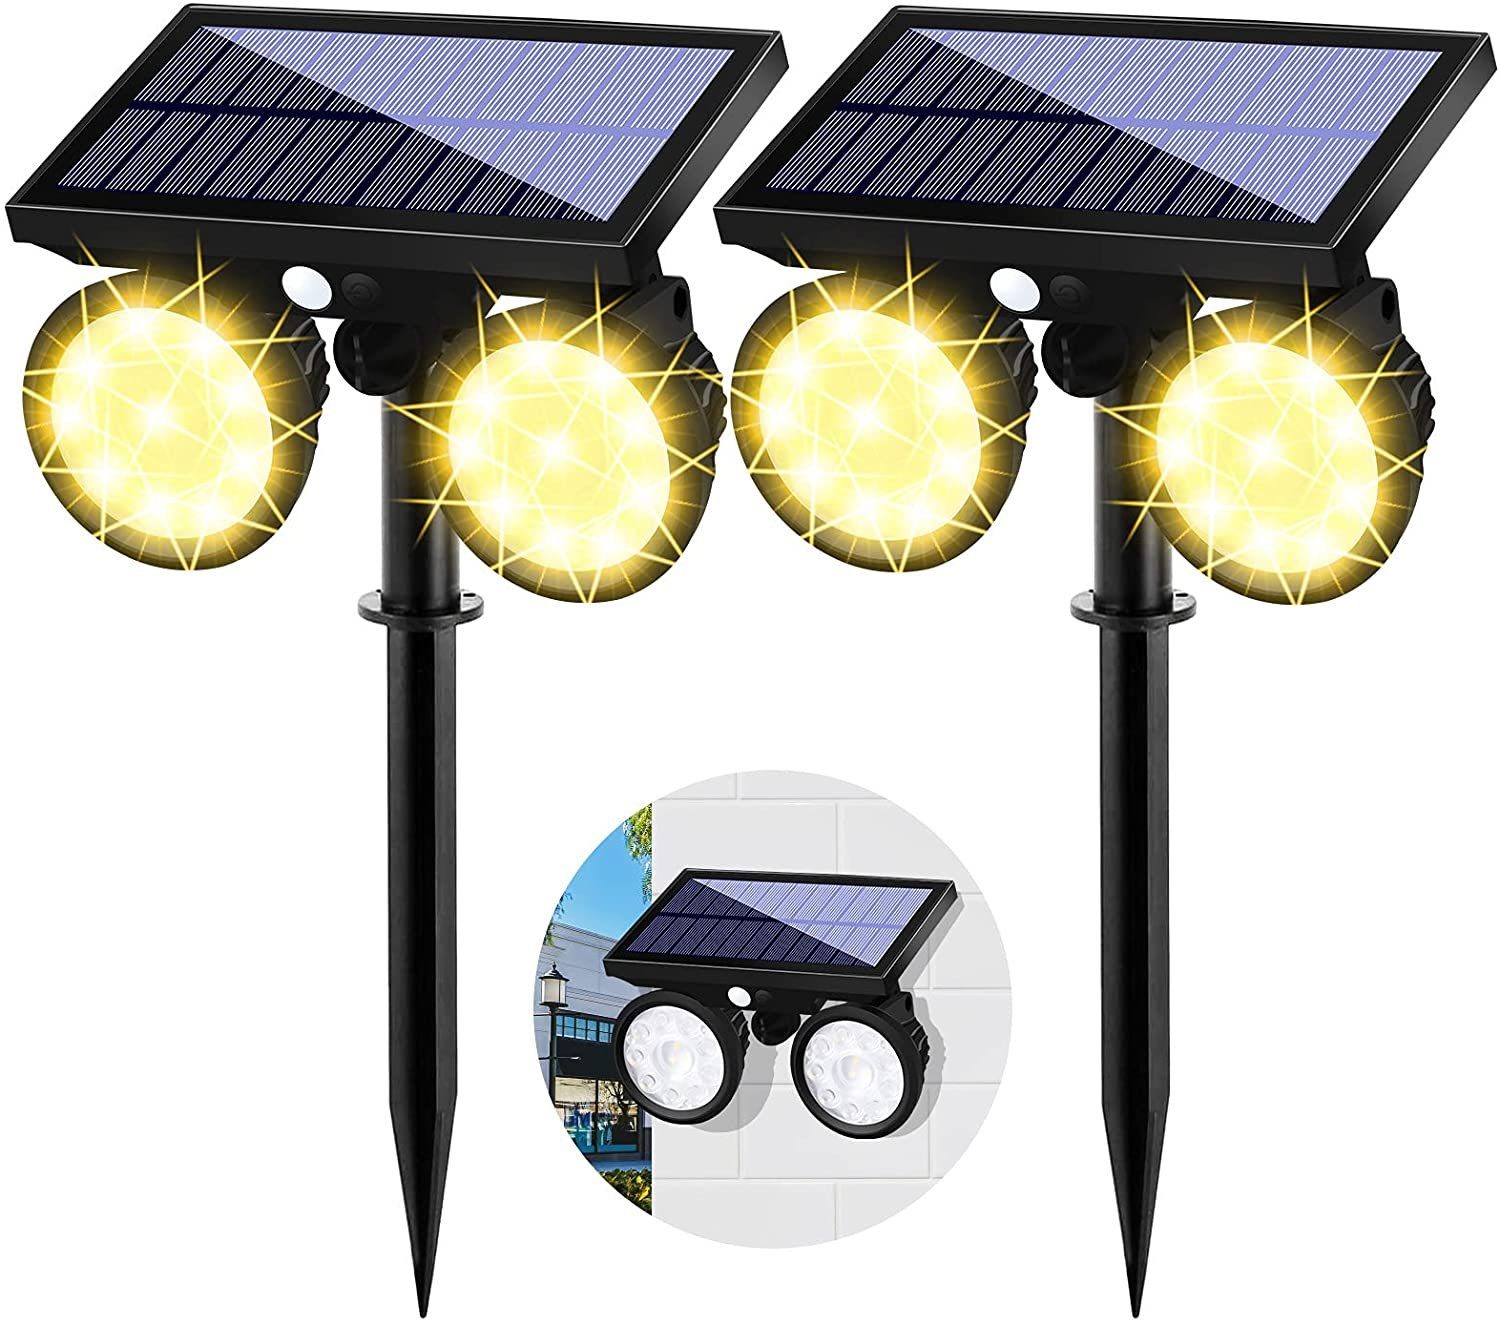 Doppel Solarstrahler mit Bewegungsmelder Außen Lampe LED Solar Leuchte Strahler 